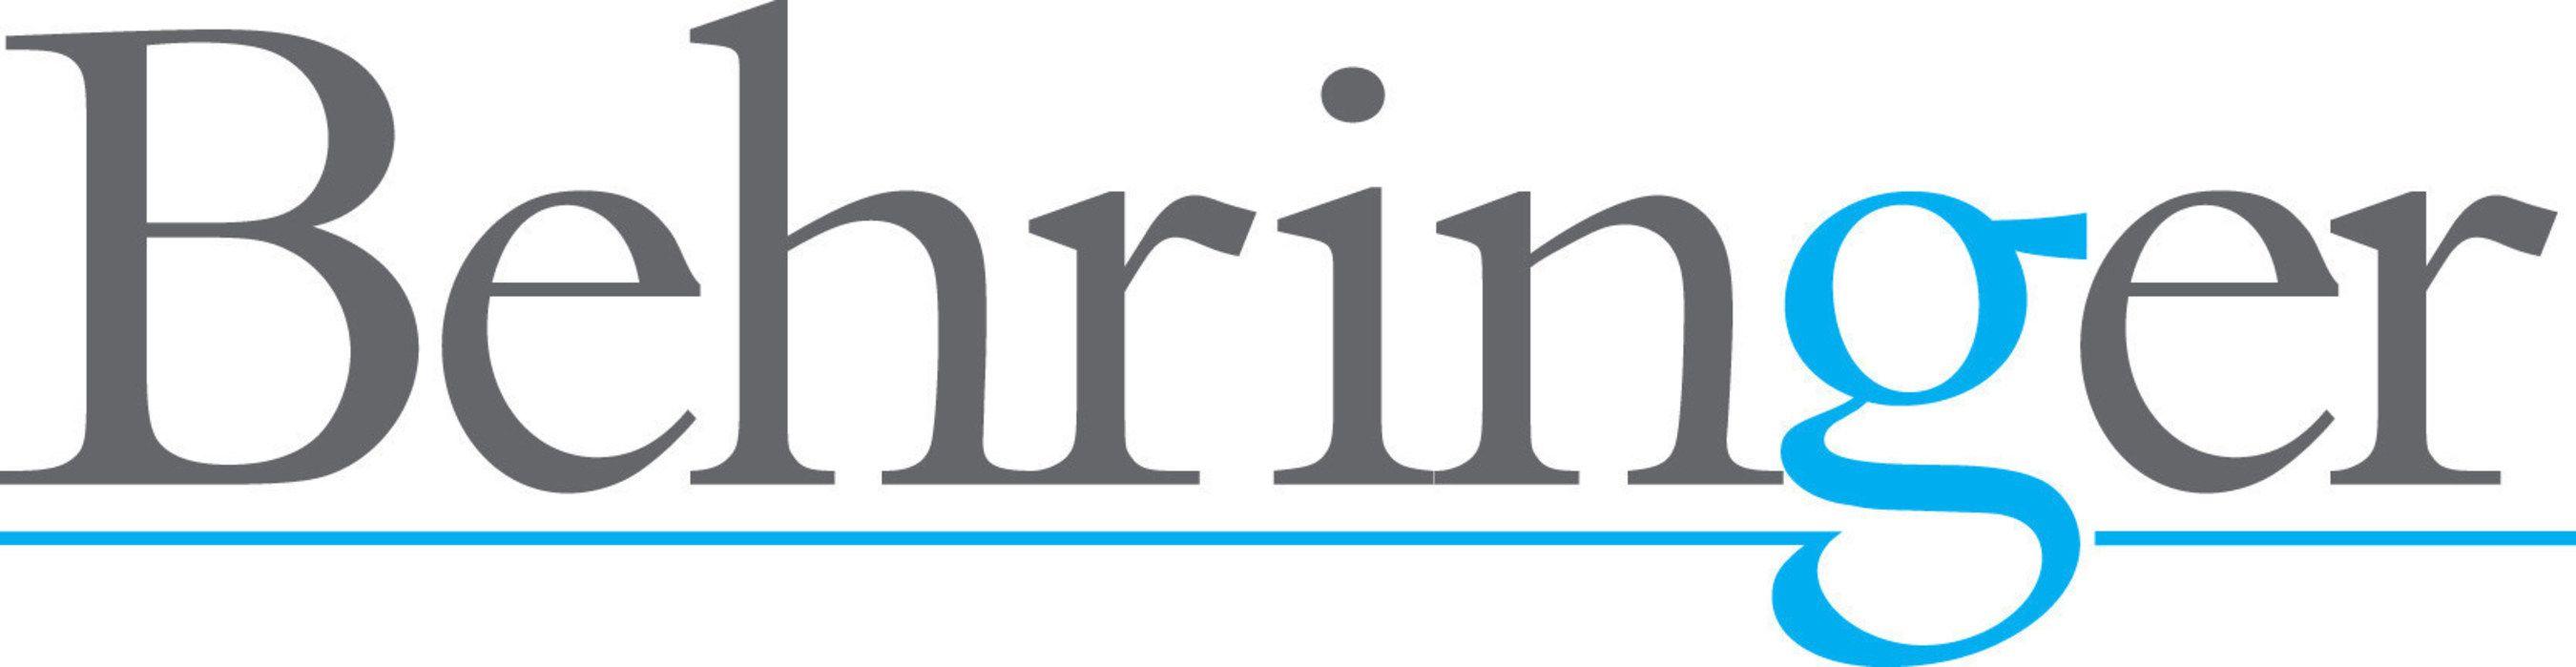 Behringer Logo - Behringer Announces Successful Closure of 1031 Offering